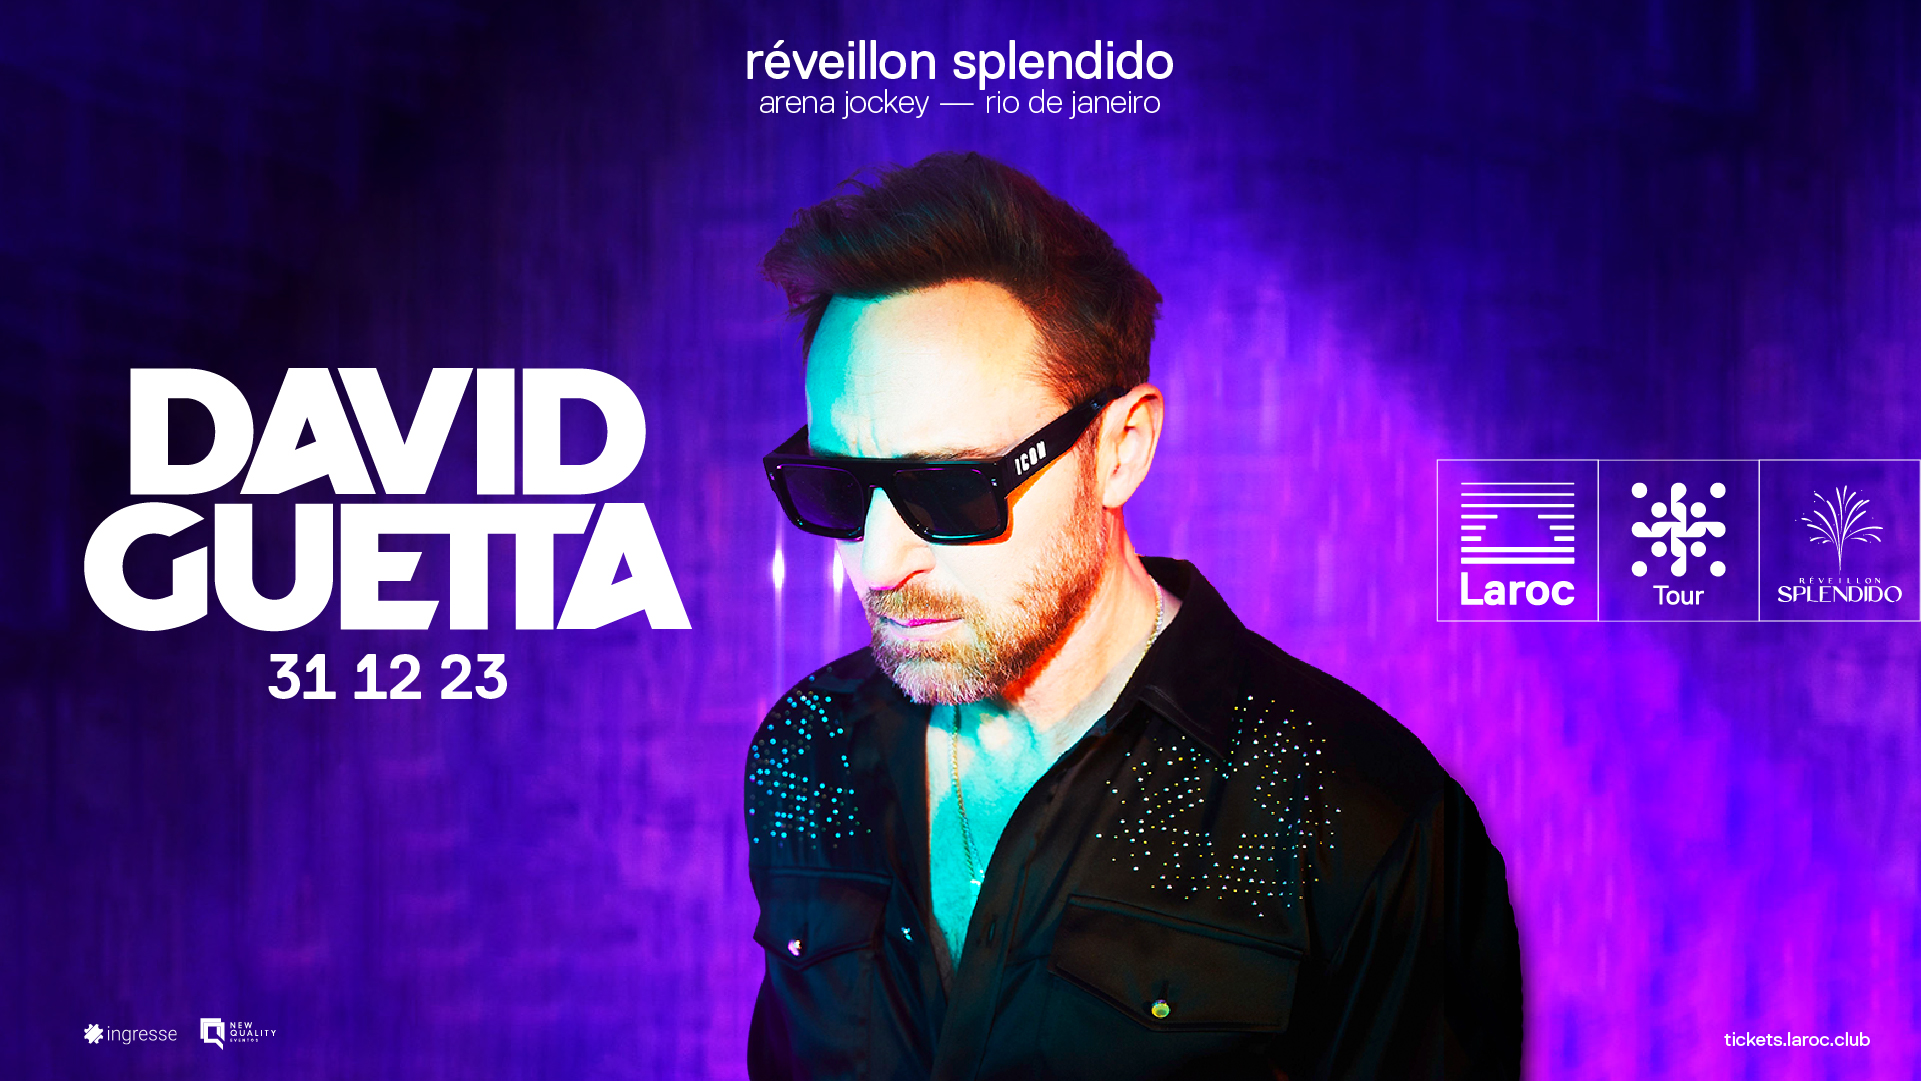 Laroc Tour anuncia David Guetta no ‘Reveillon Splendido do Rio de Janeiro POP CYBER